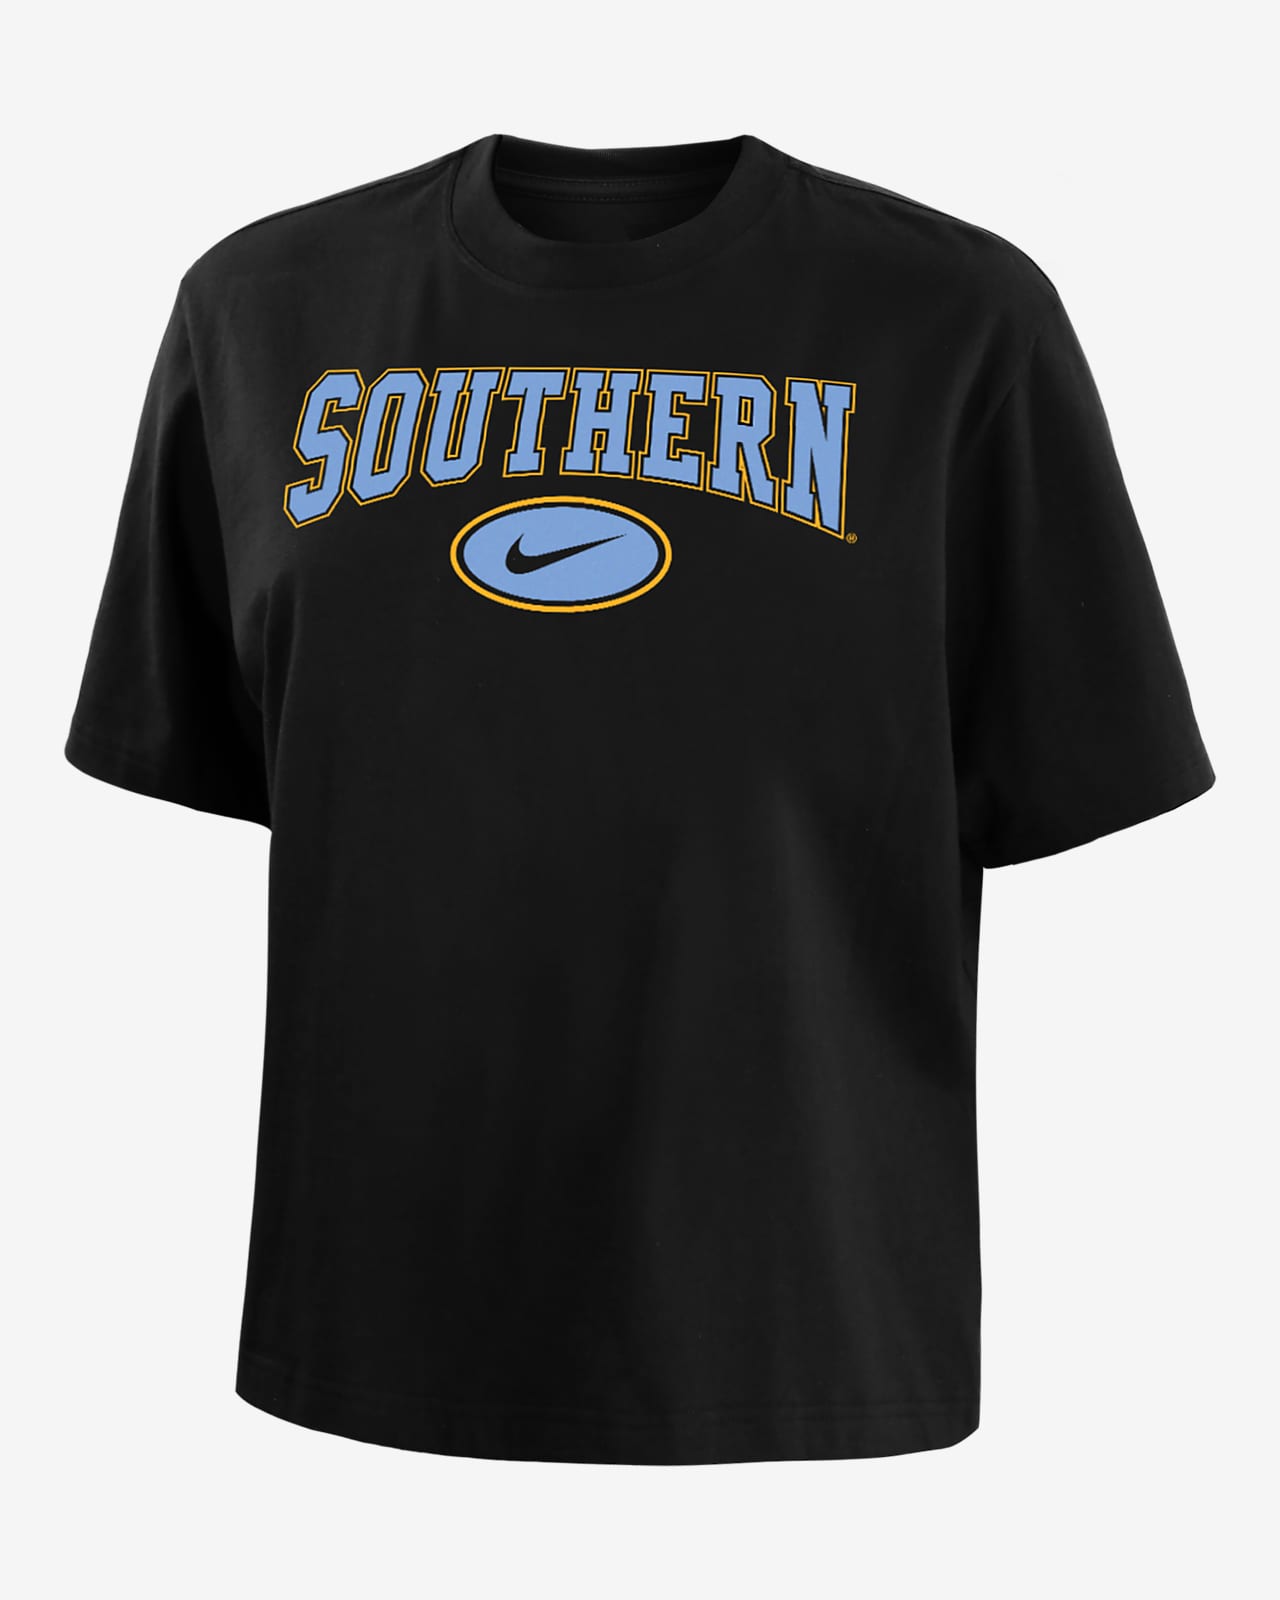 Southern Women's Nike College Boxy T-Shirt